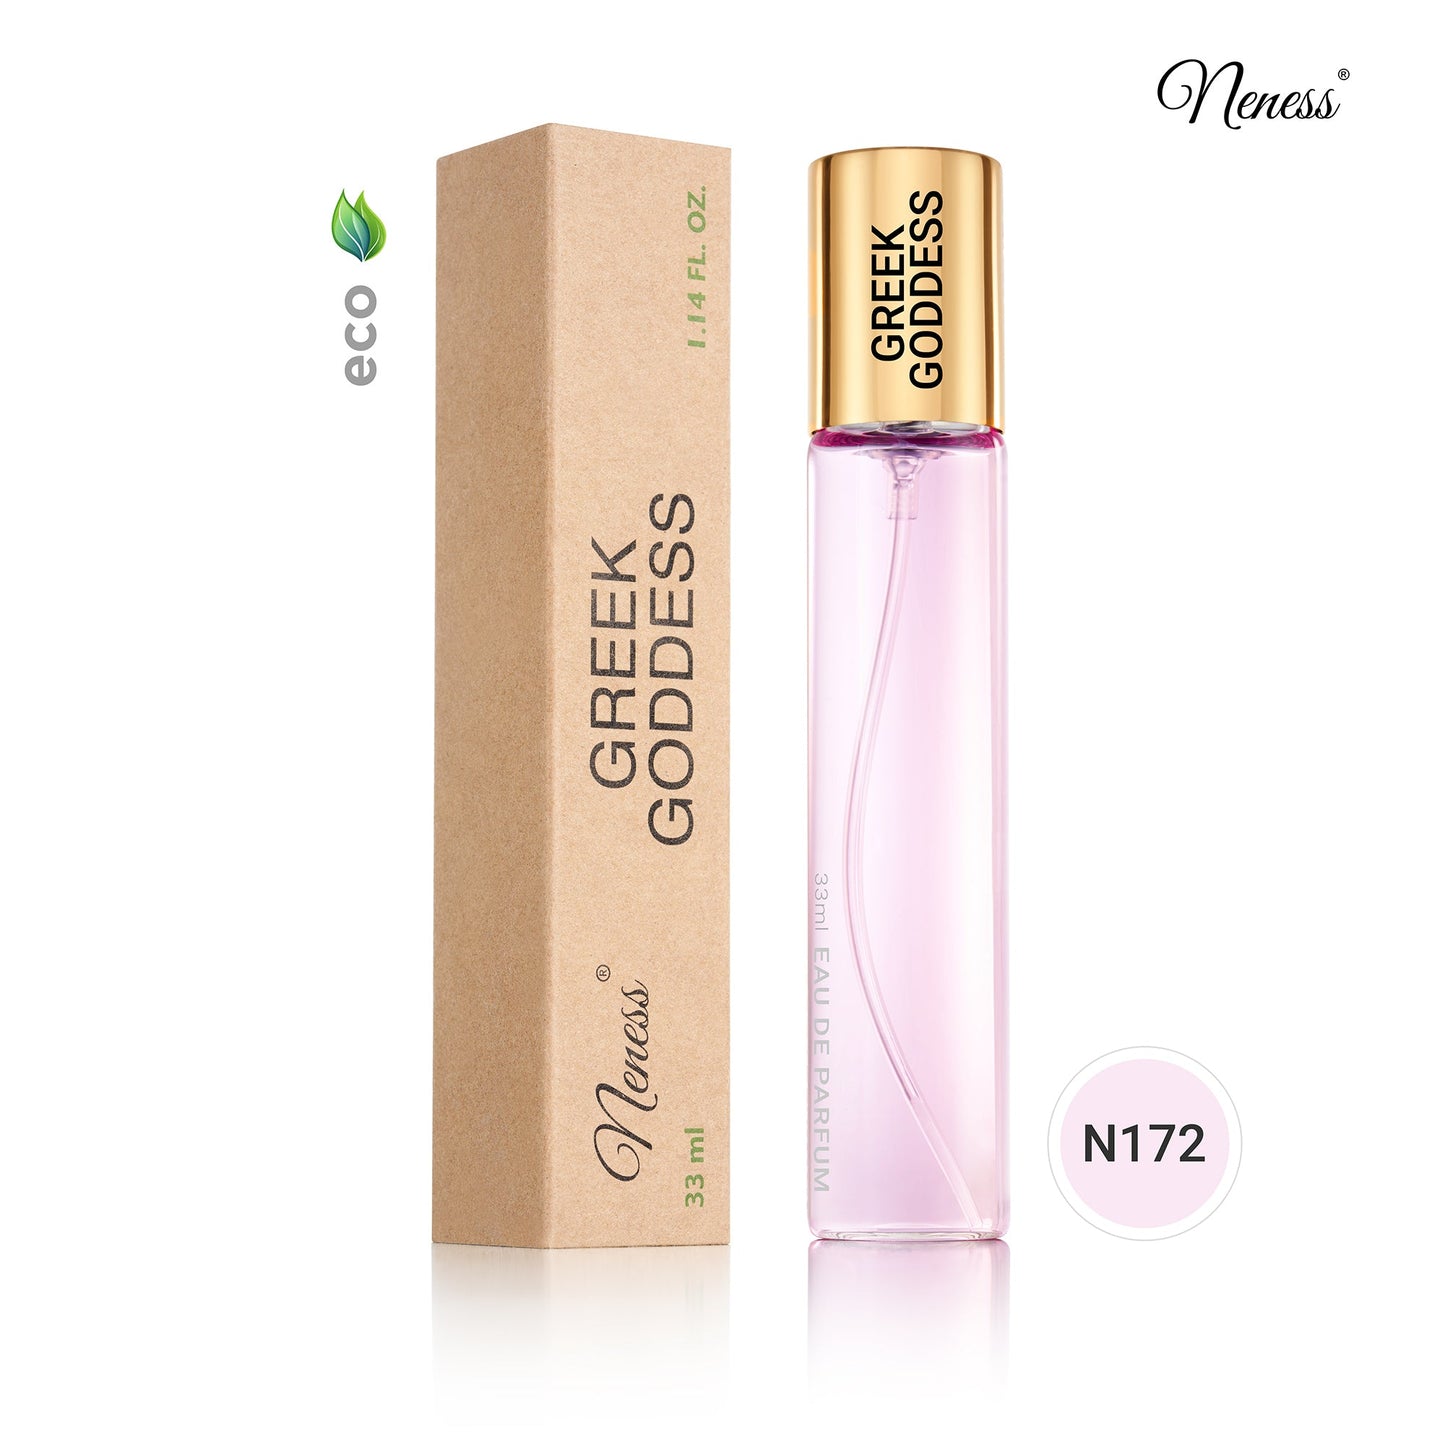 N172. Neness Greek Goddess - 33 ml - Parfum Pour Femme